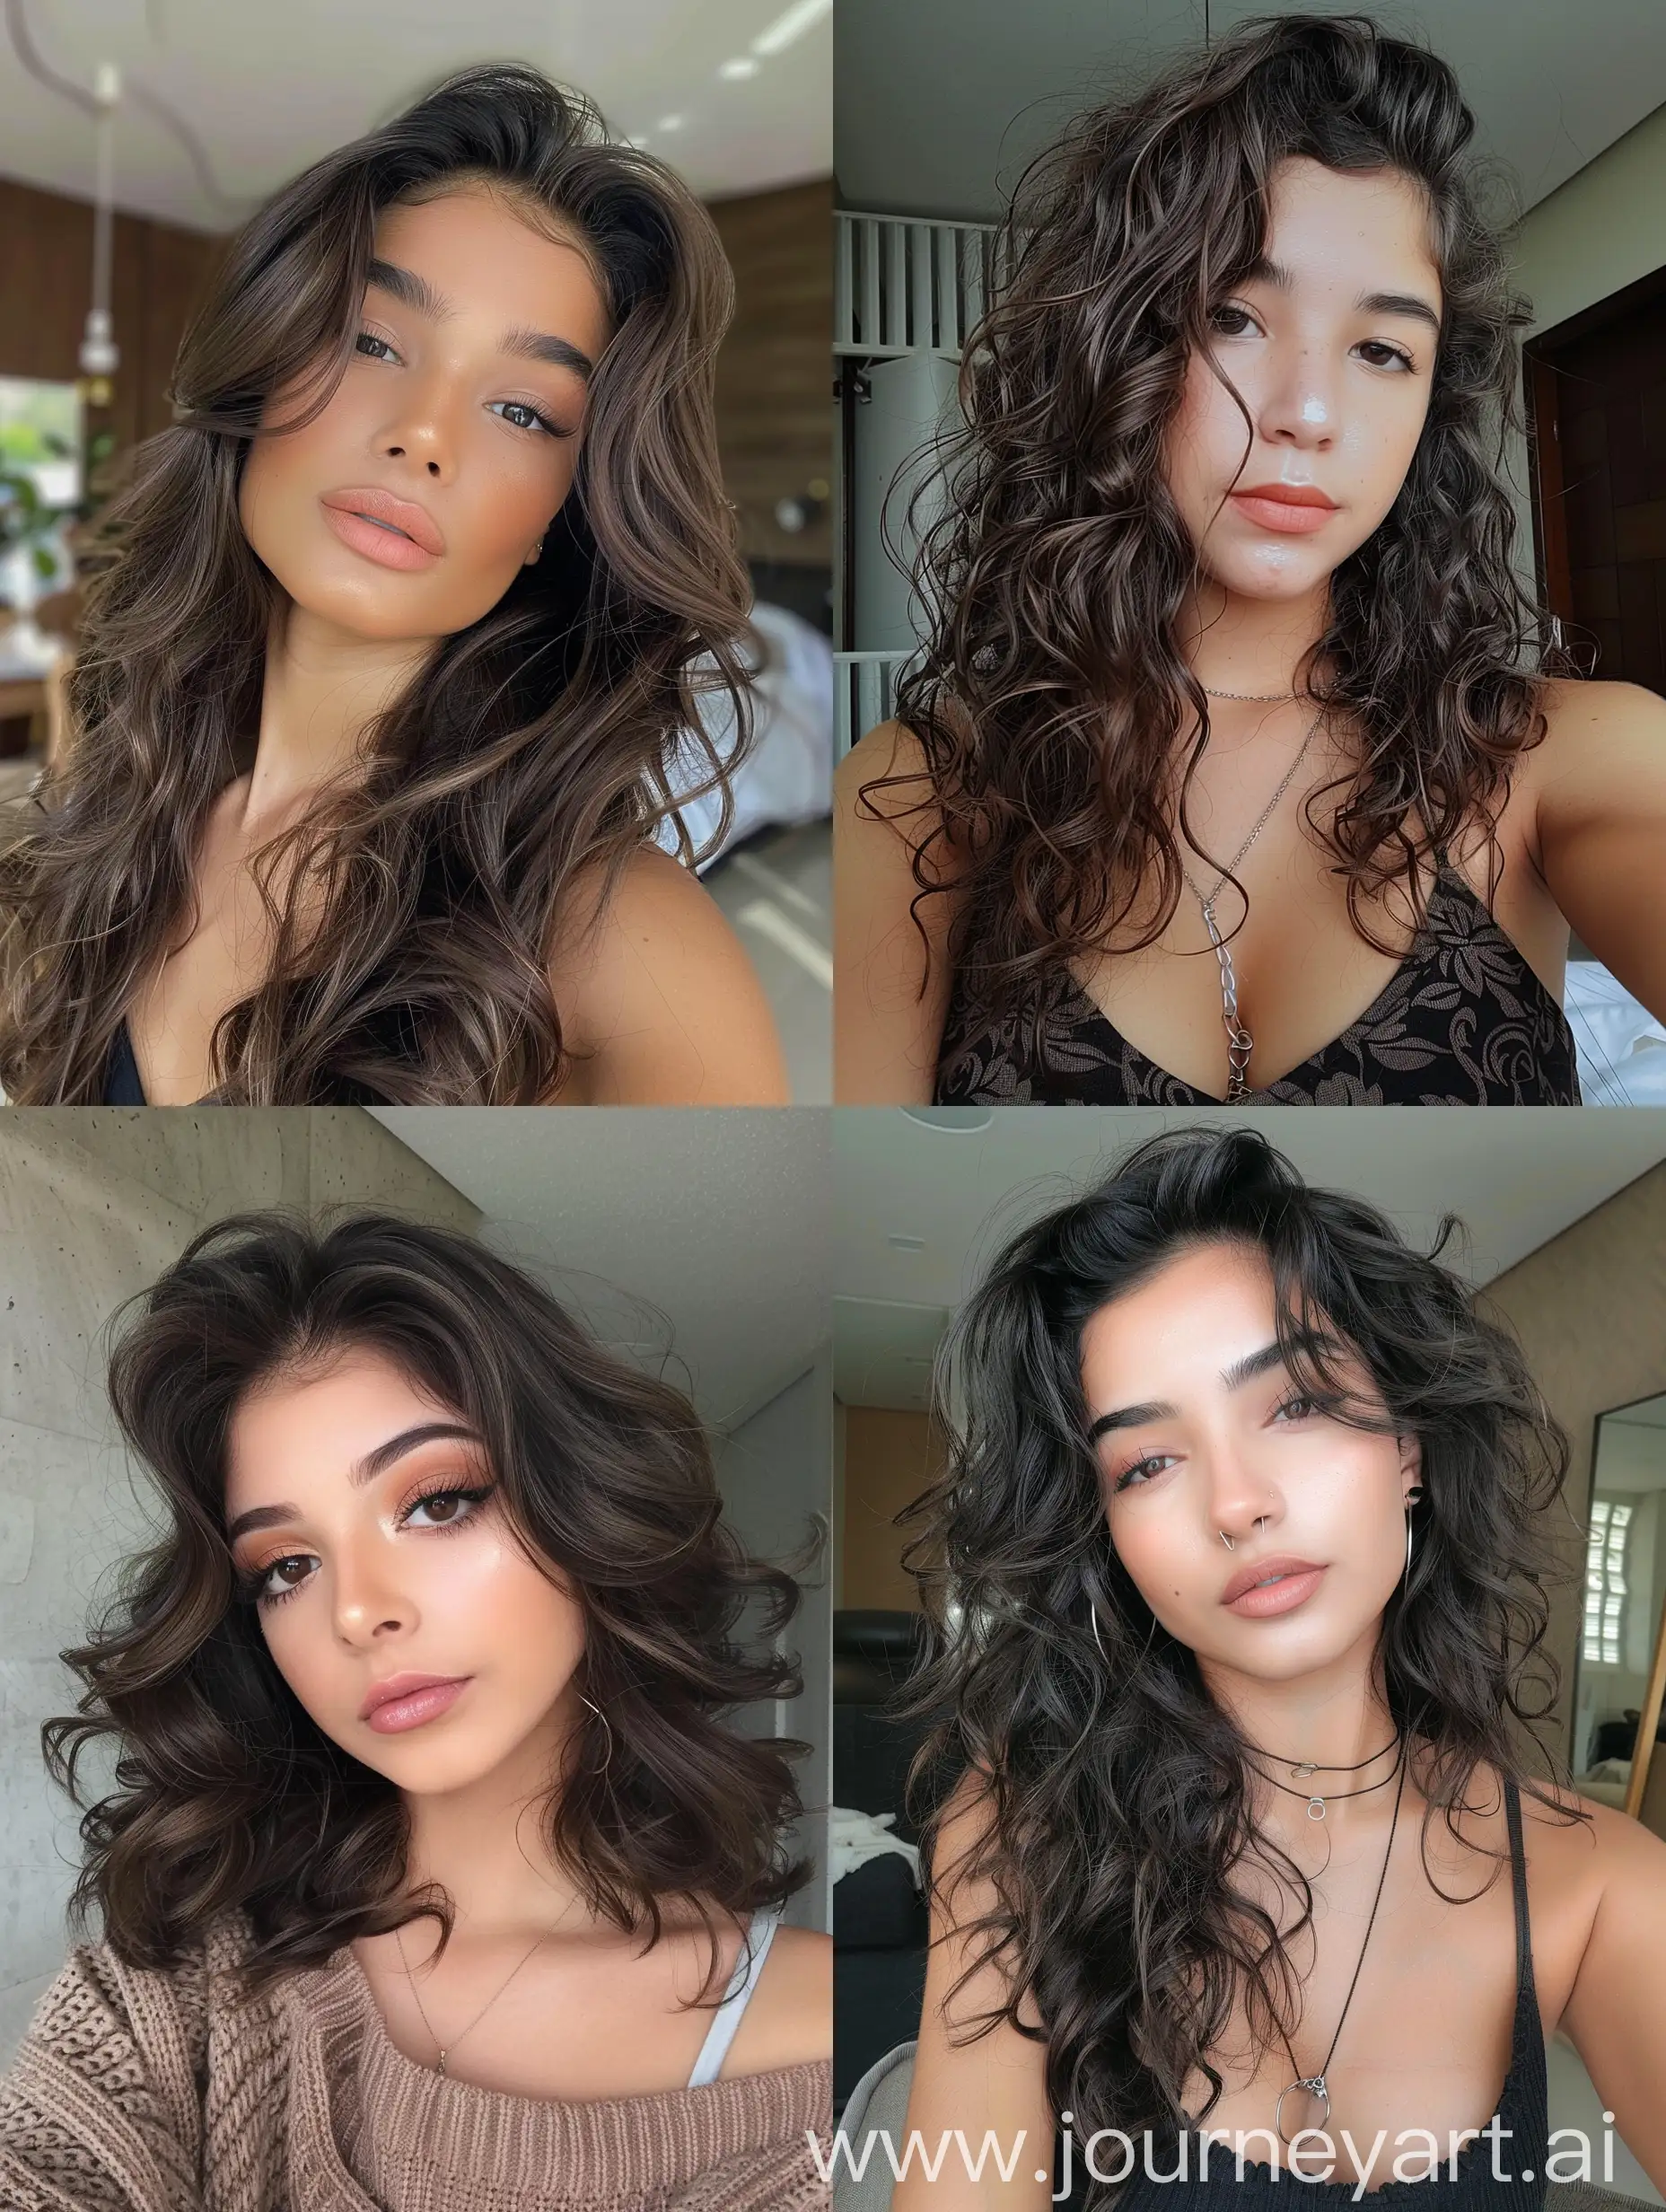 Brazilian-Teenage-Girl-with-Wavy-Brown-Hair-Taking-a-Beauty-Selfie